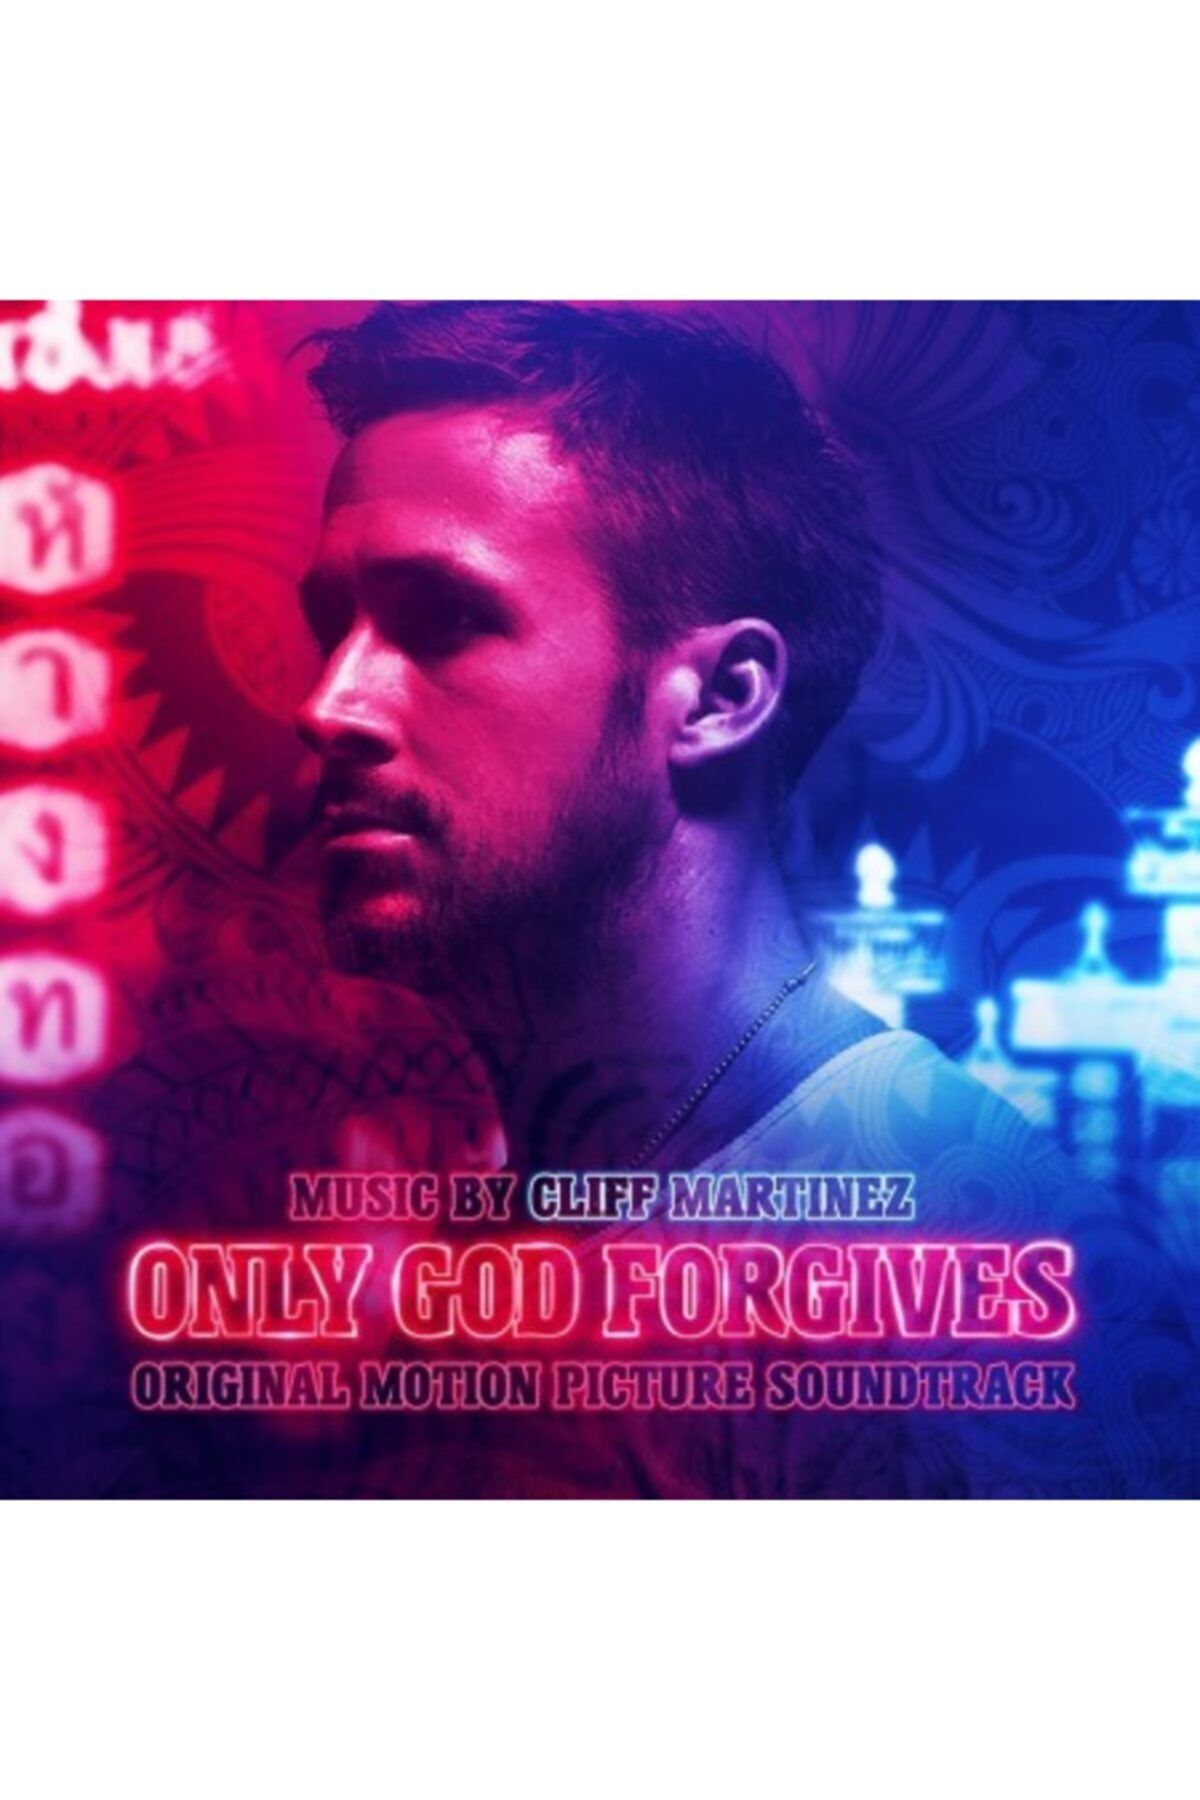 Milan Cd - Original Soundtrack By Cliff Martinez - Only God Forgives